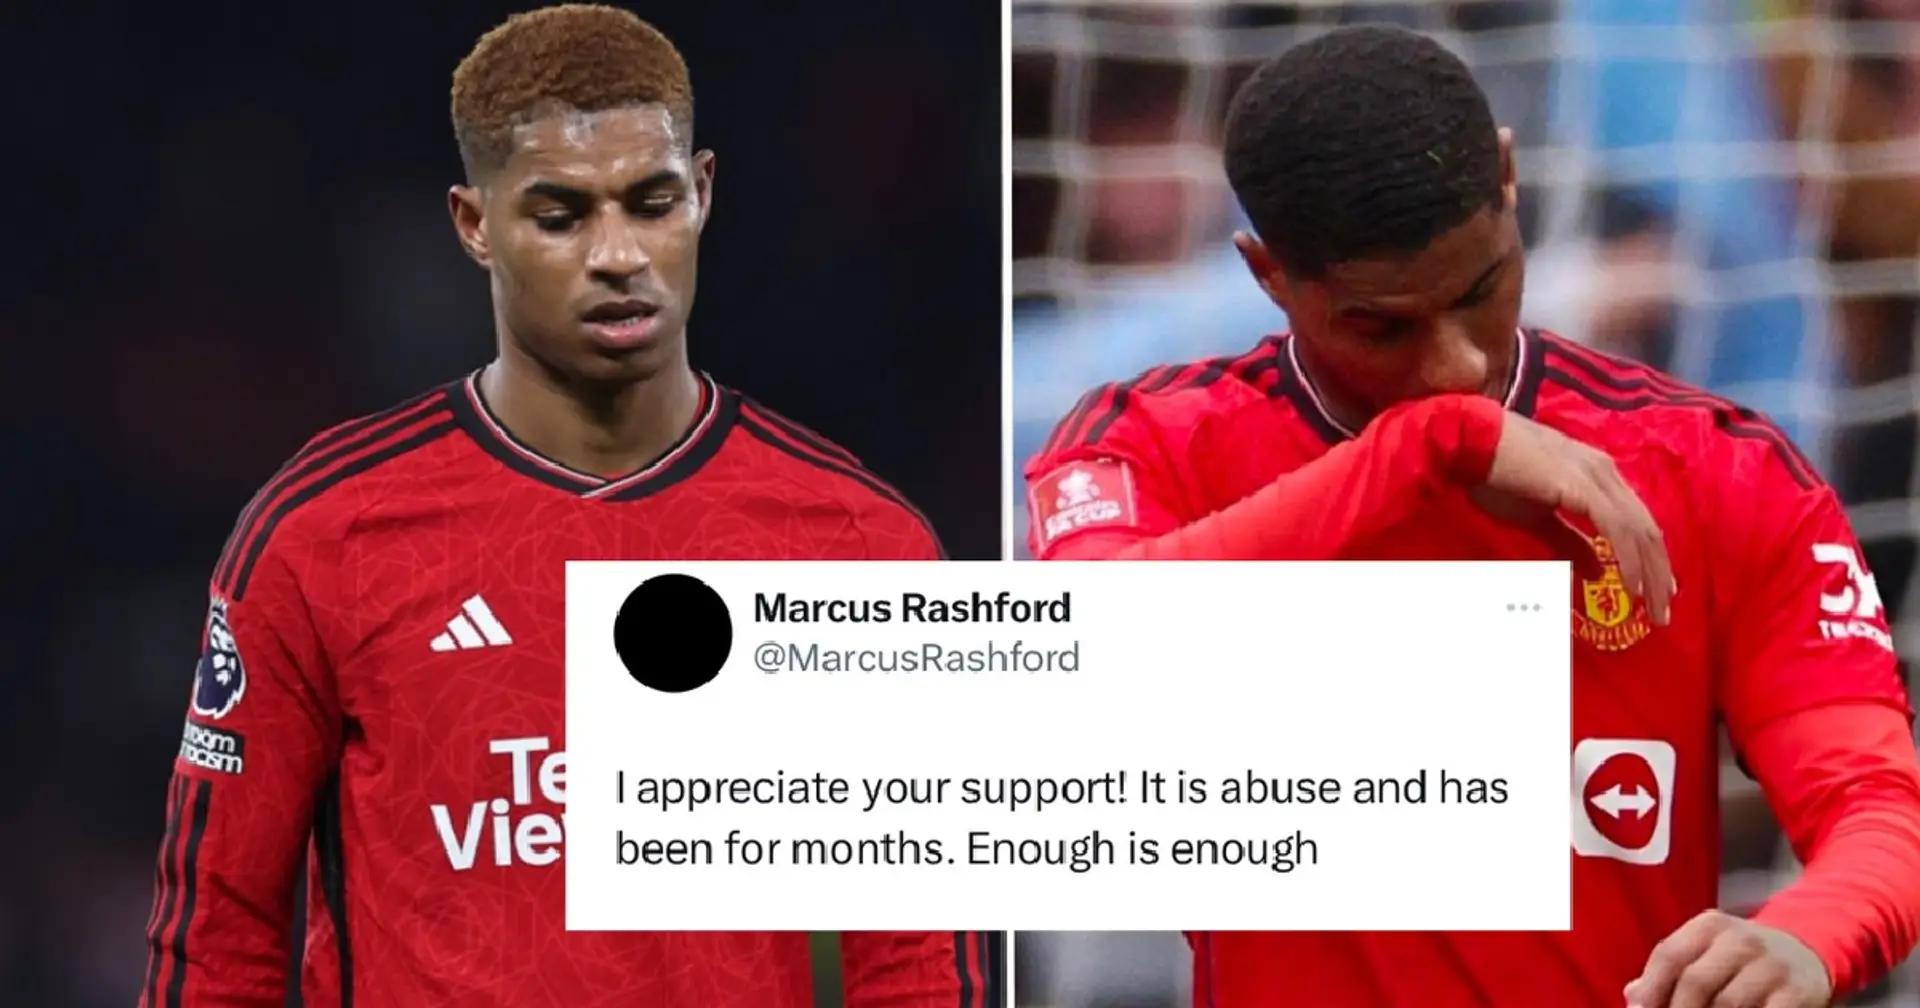 Ten Hag reacts to Marcus Rashford's social media post